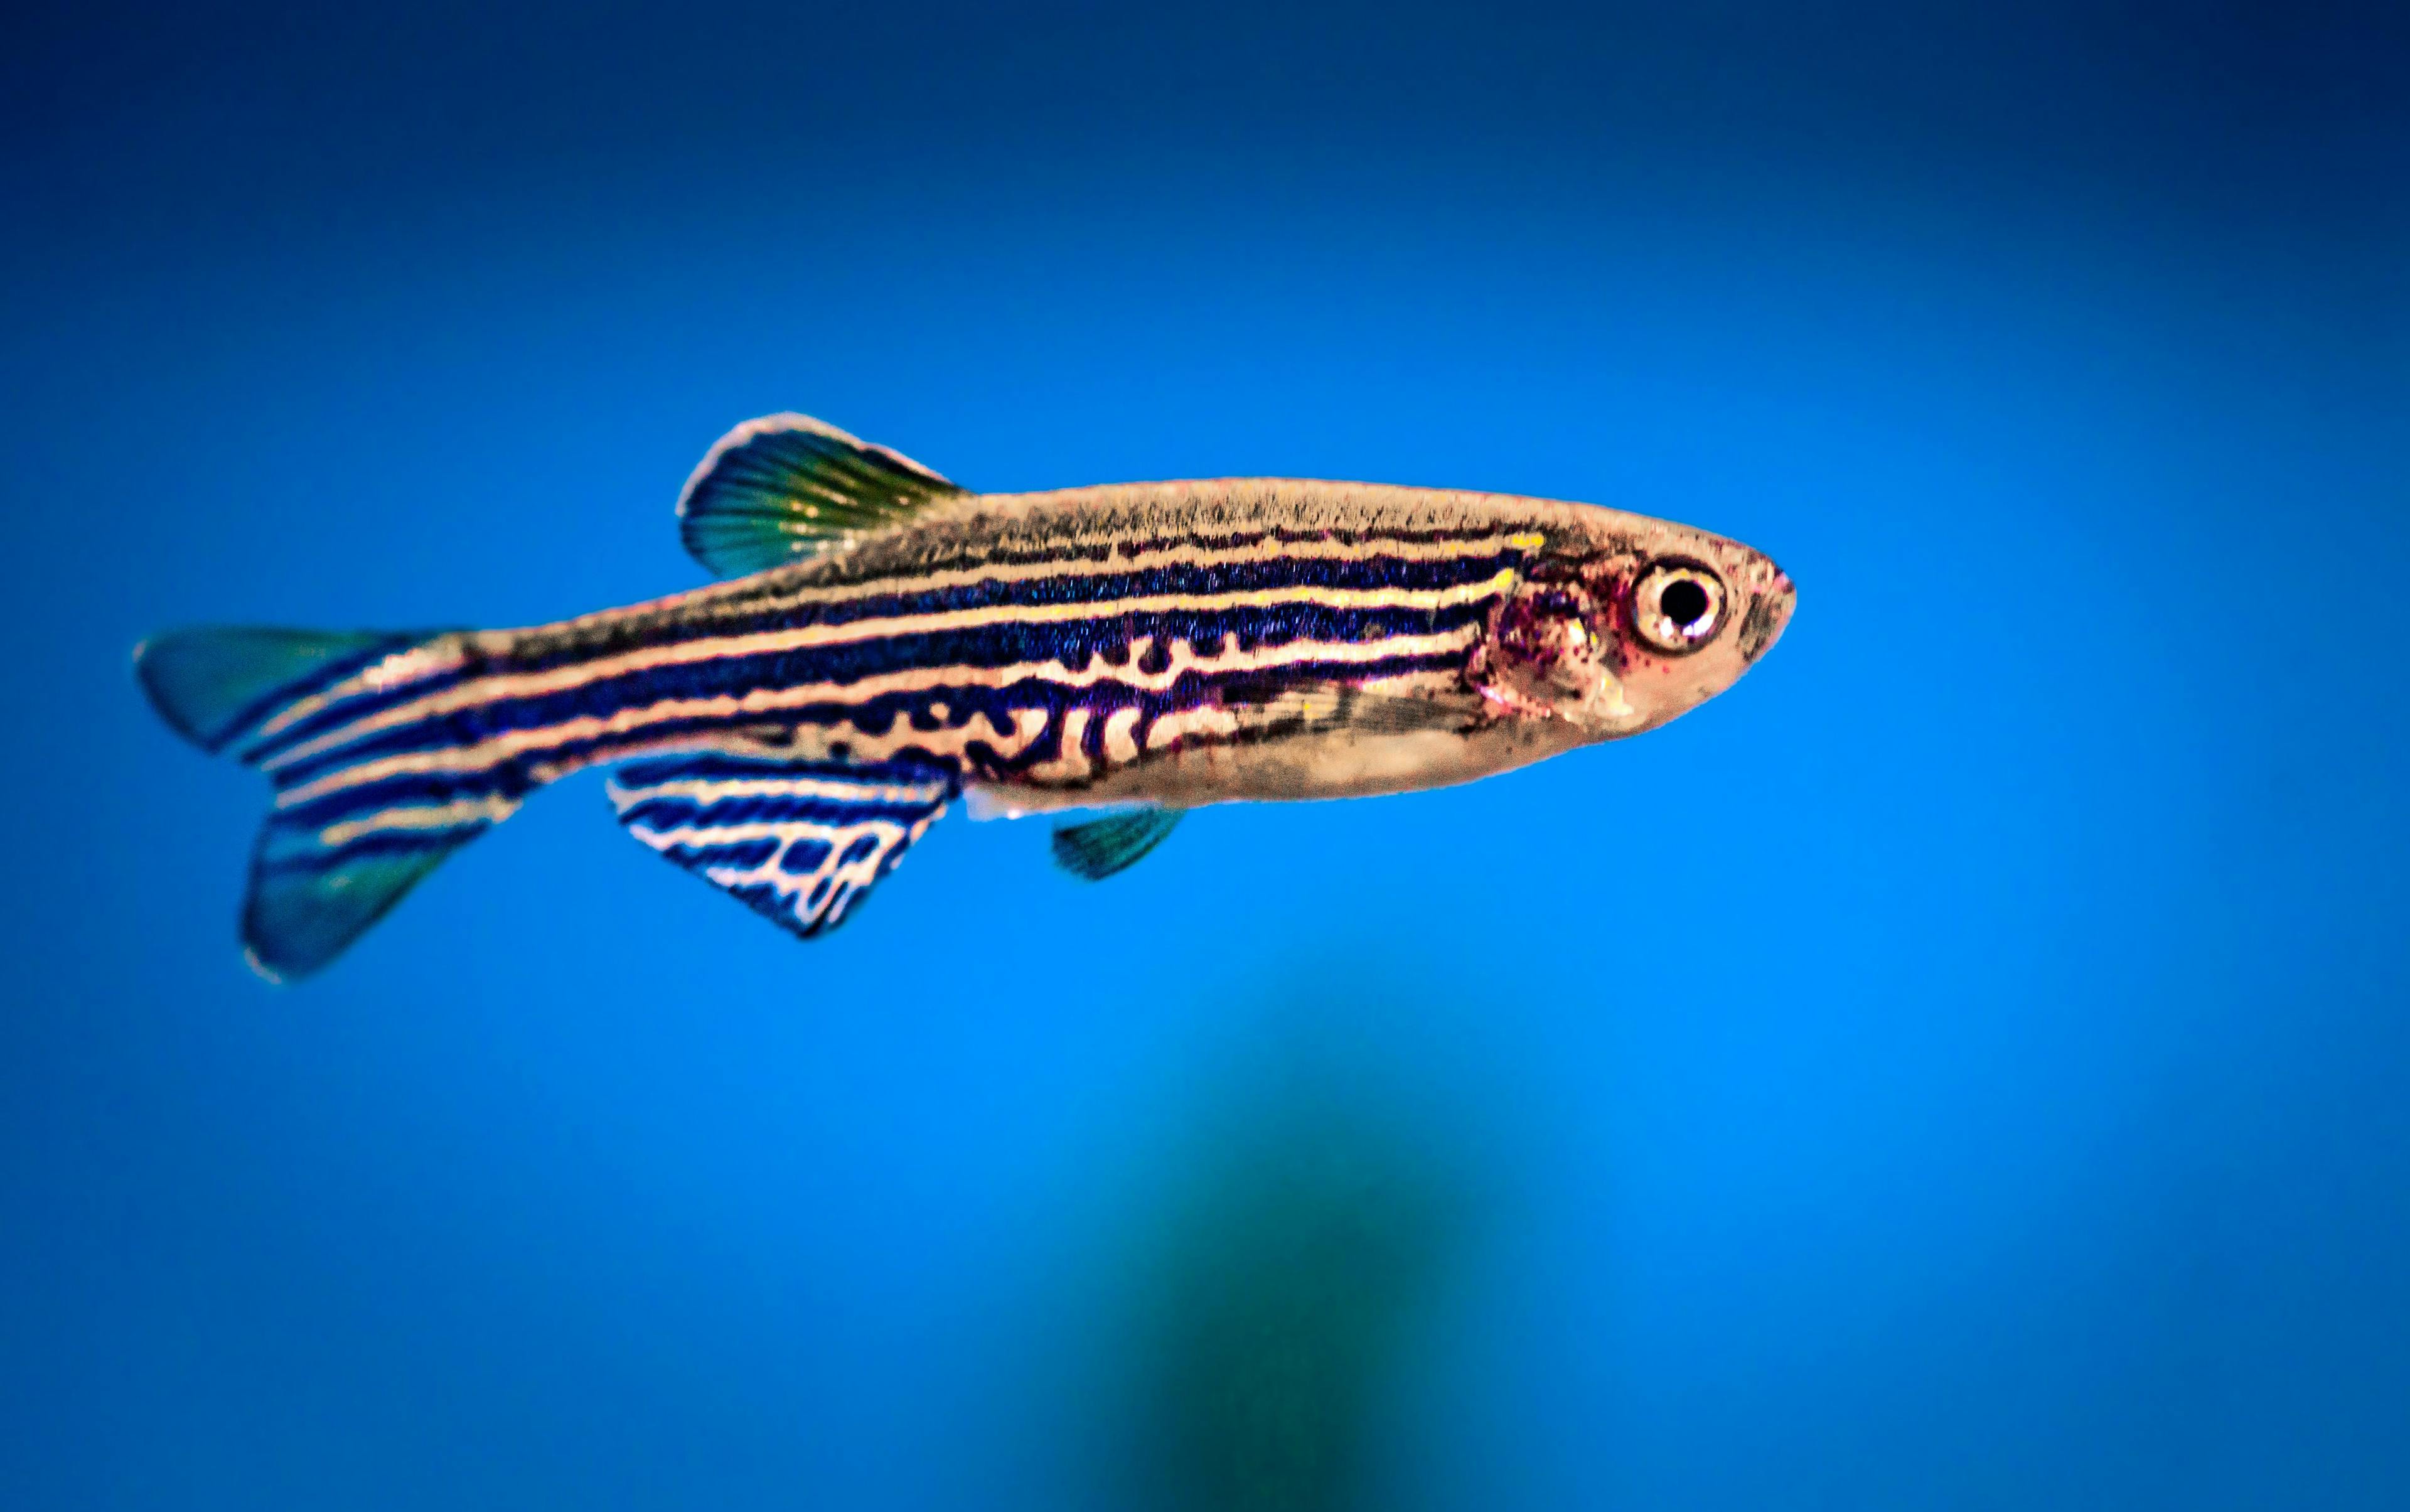 aquarium fish, zebrafish on a blue background | Image Credit: © peter verreussel - stock.adobe.com